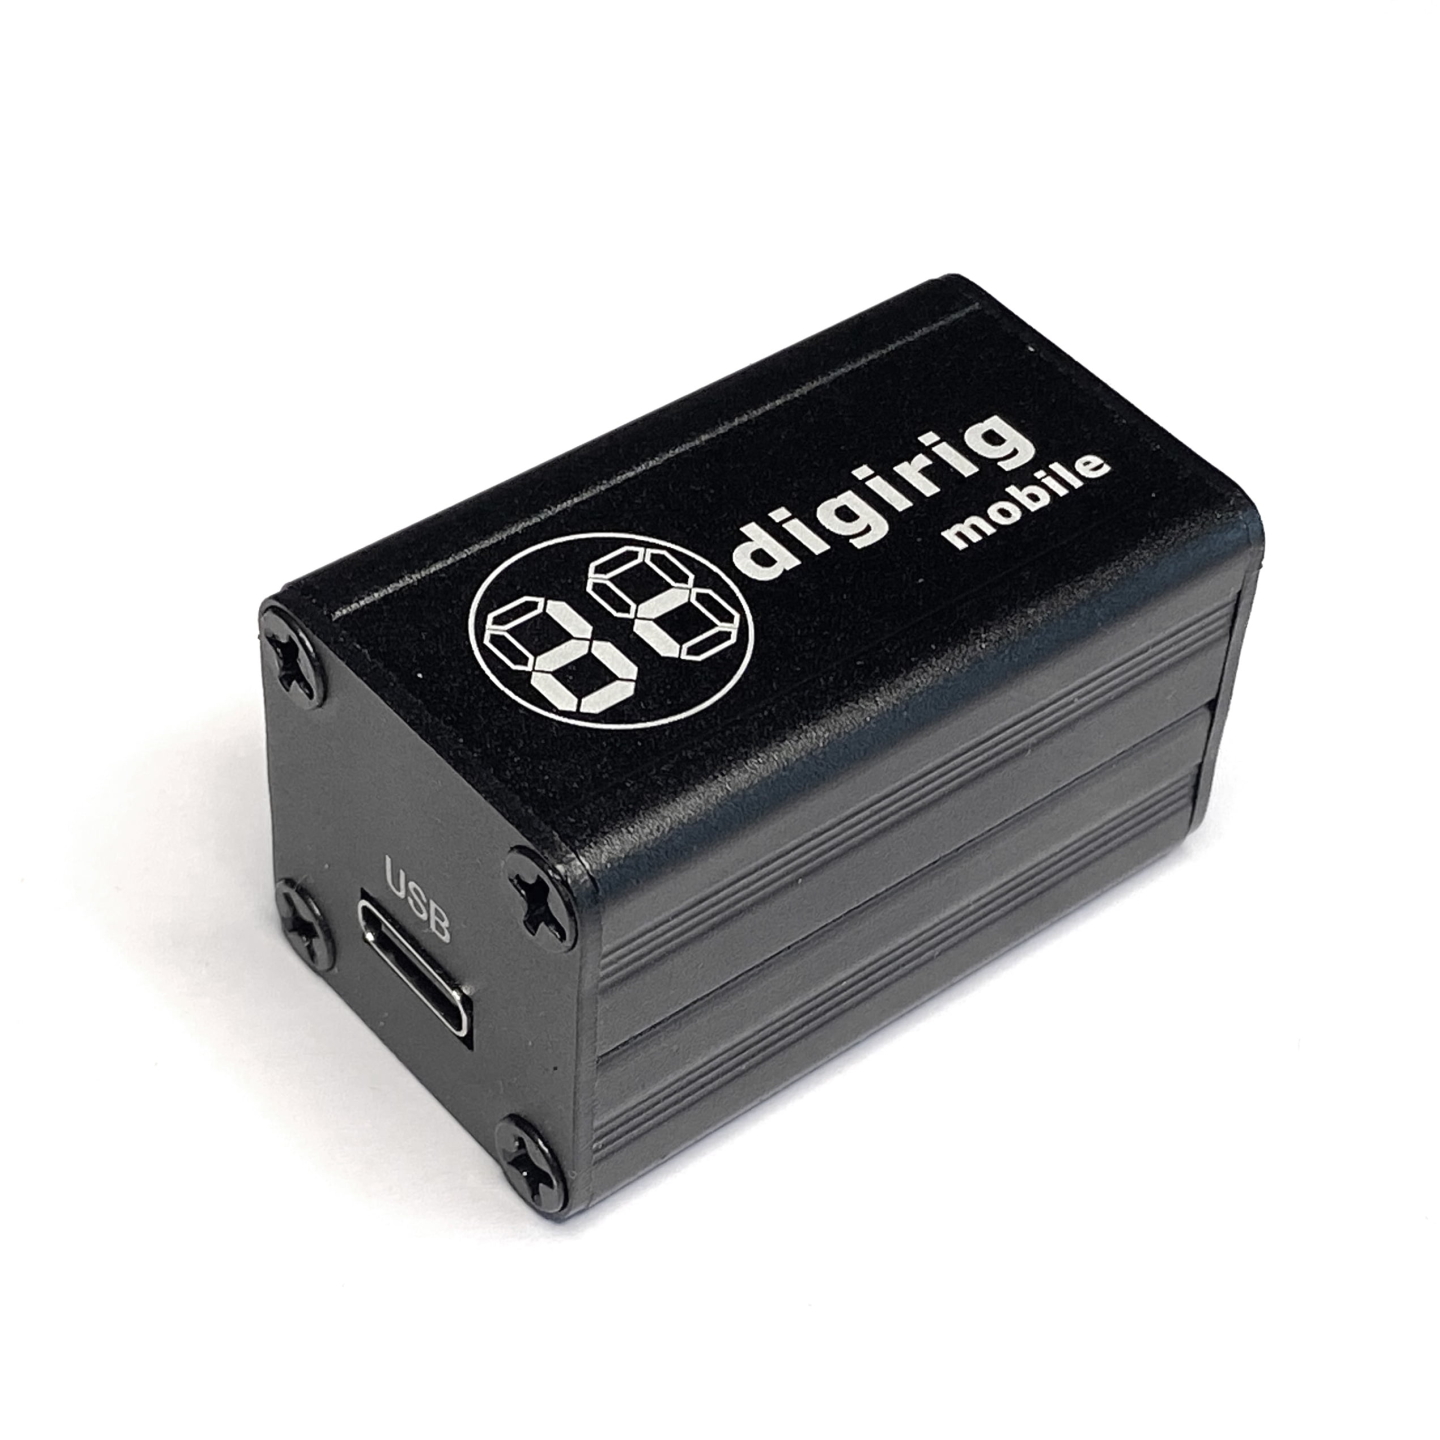 DigiRig USB Audio device